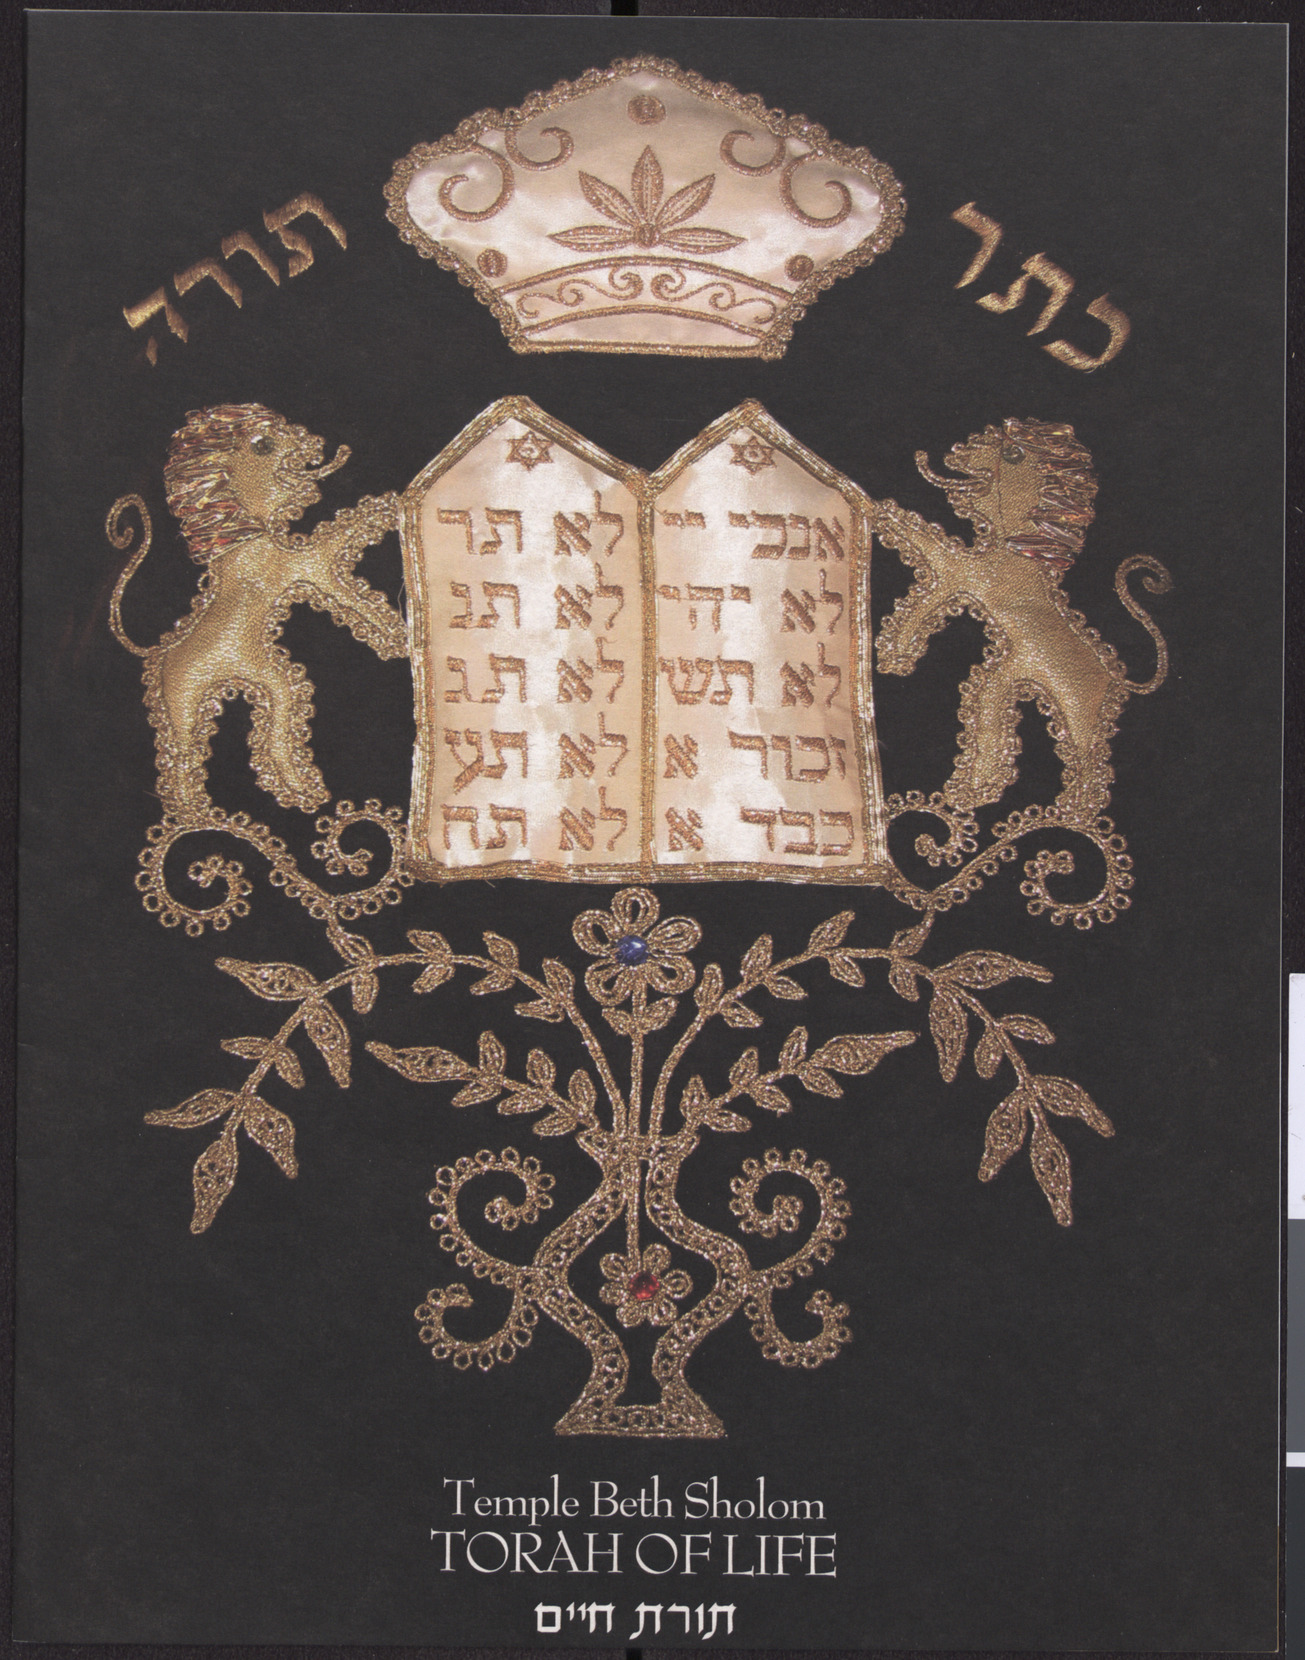 Booklet, Torah of Life, Temple Beth Sholom, cover